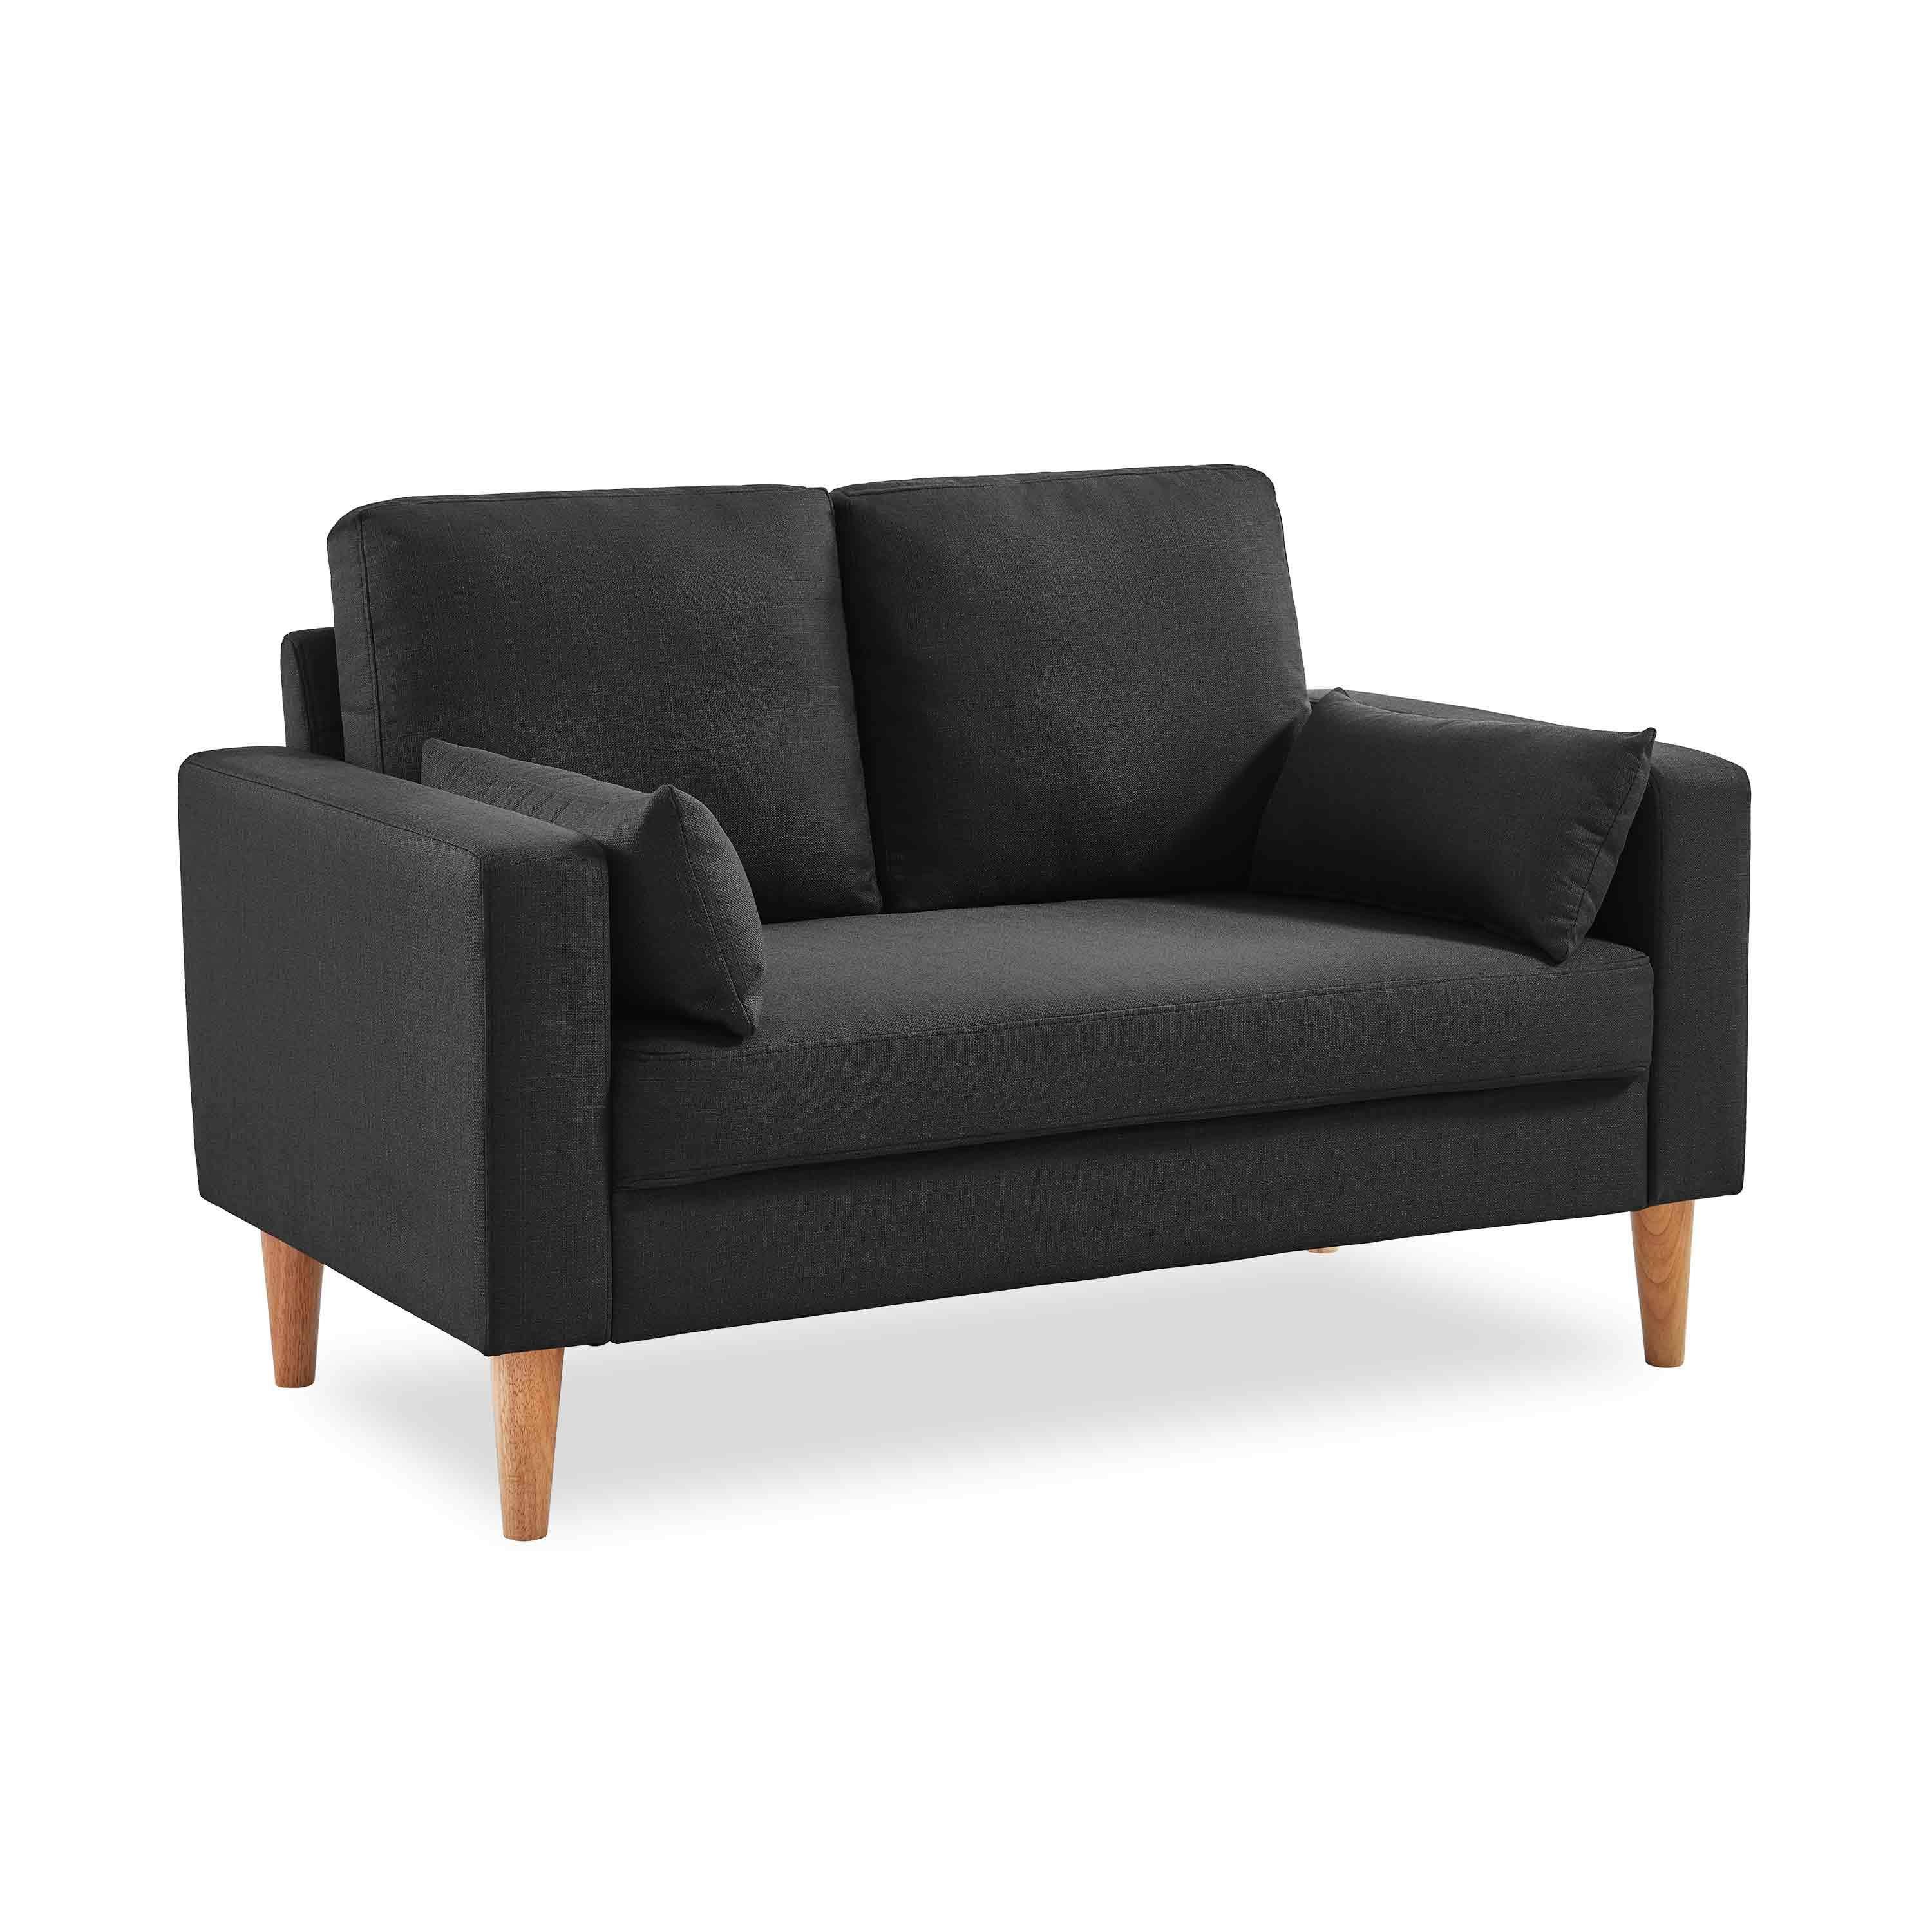 Medium 2-seater sofa Scandi-style with wooden legs - Bjorn - Dark Grey,sweeek,Photo2